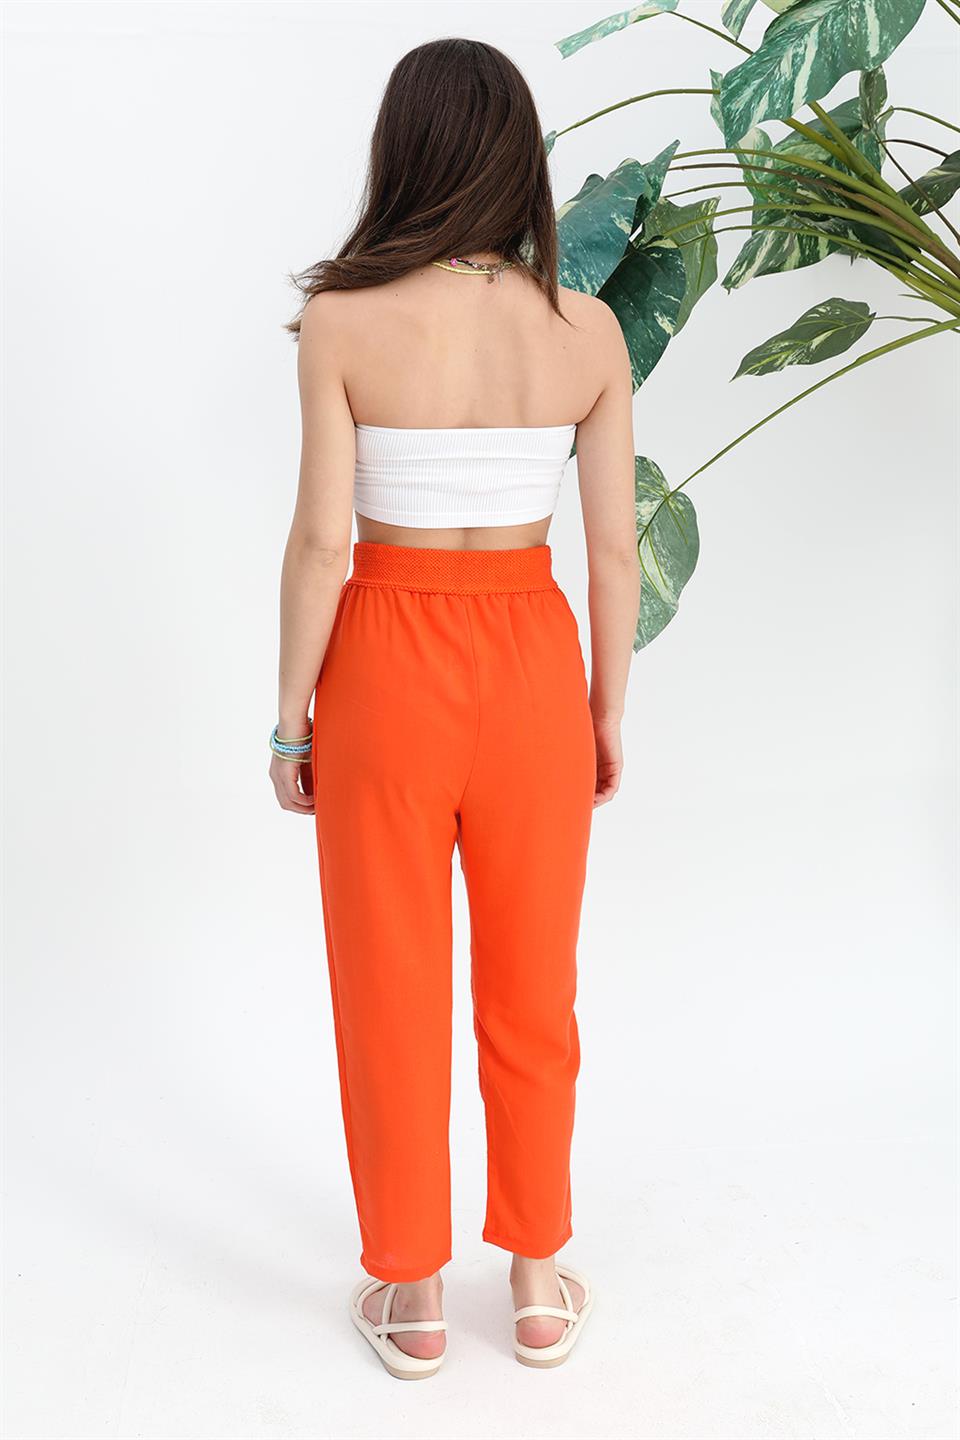 Women's Trousers Waist Elastic Corded Cotton Fabric - Orange - STREETMODE ™